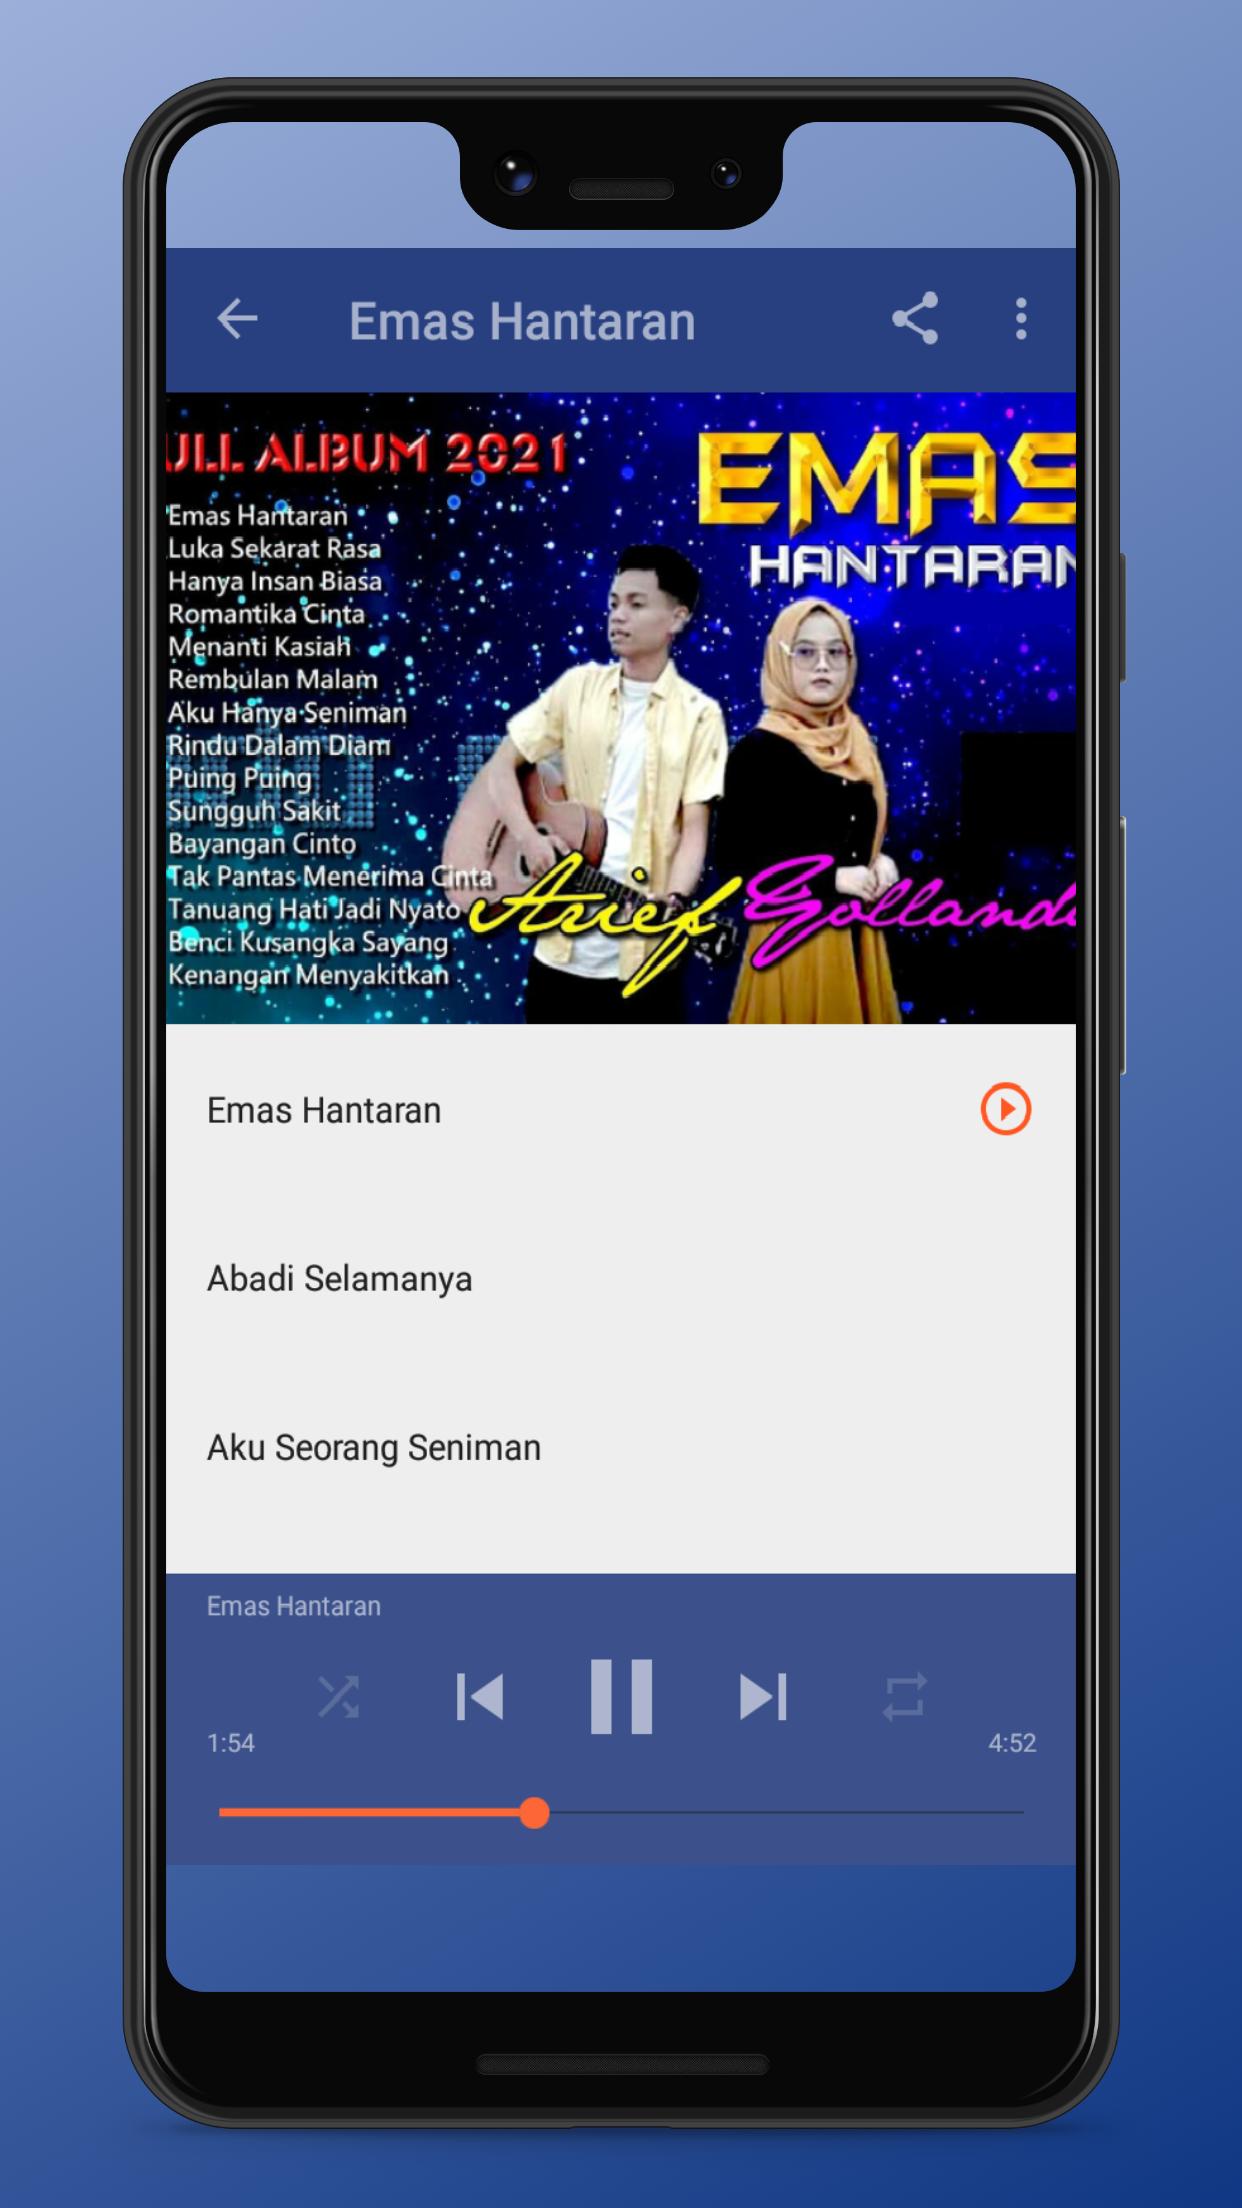 Arief malam album full download lagu mp3 rembulan Download Lagu